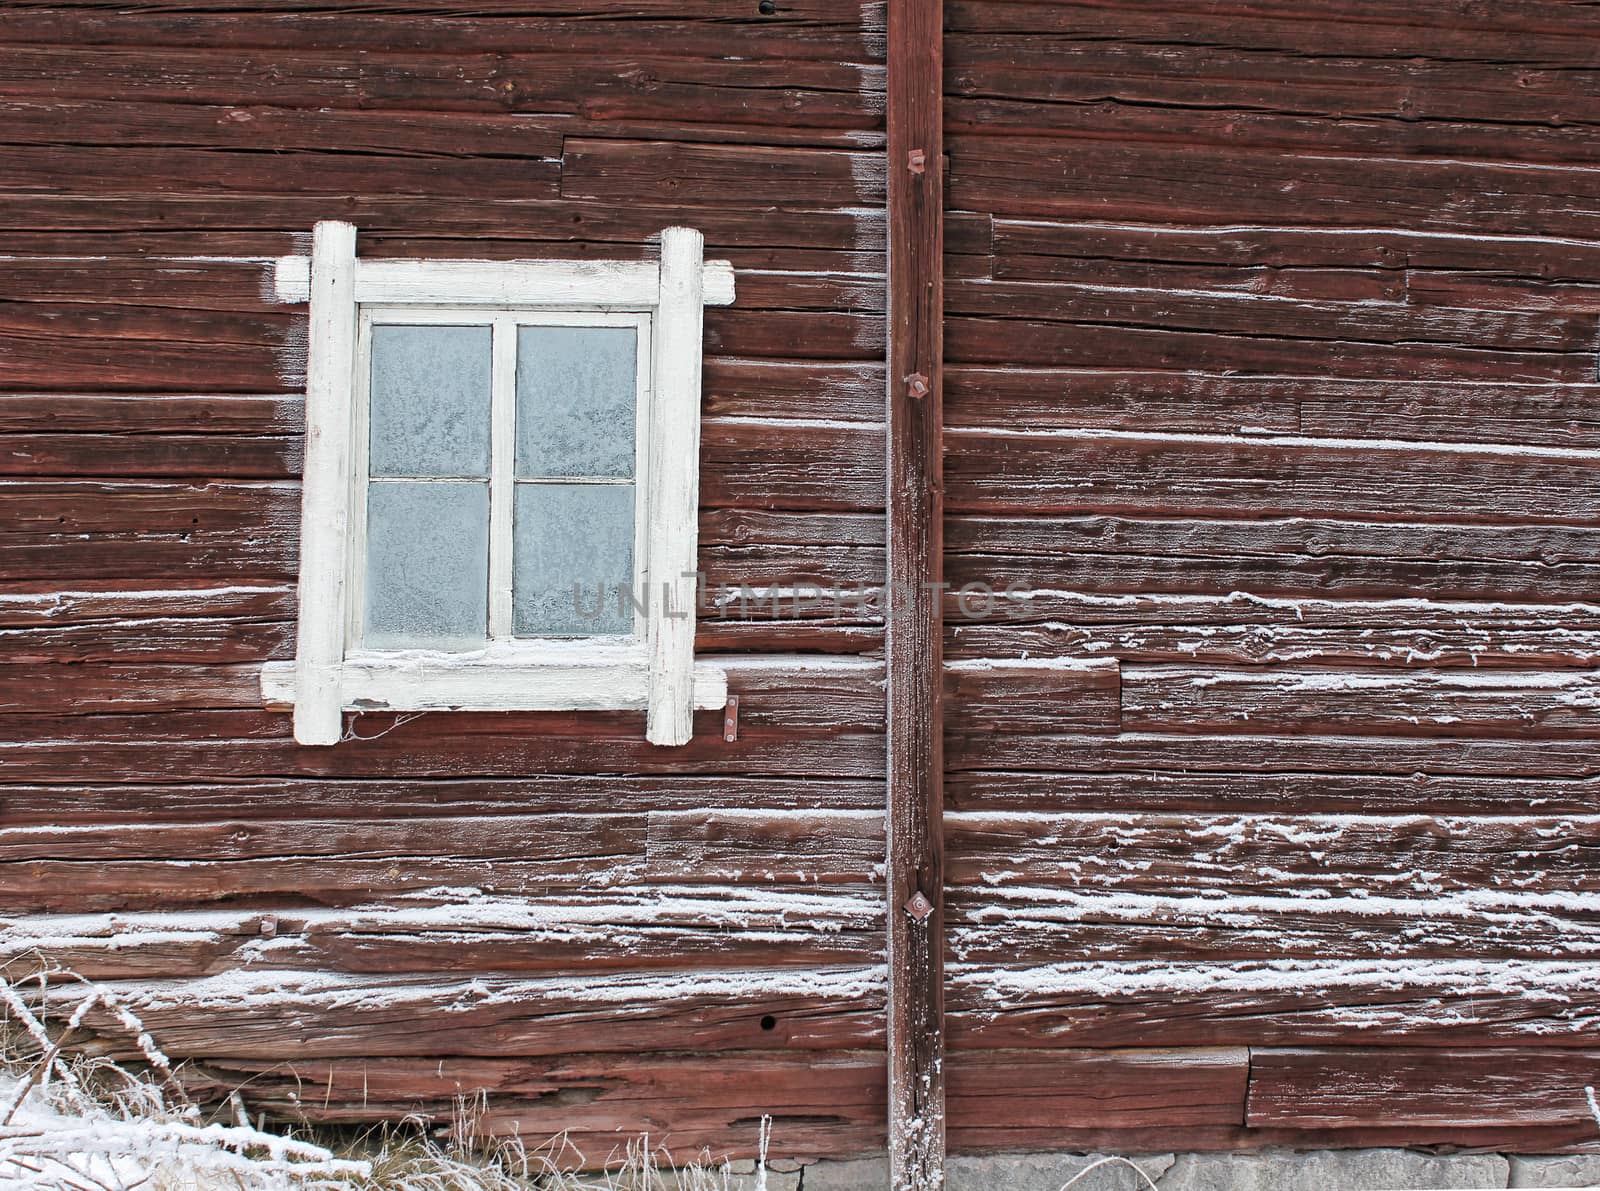 Frosty window of old log home, winter season background